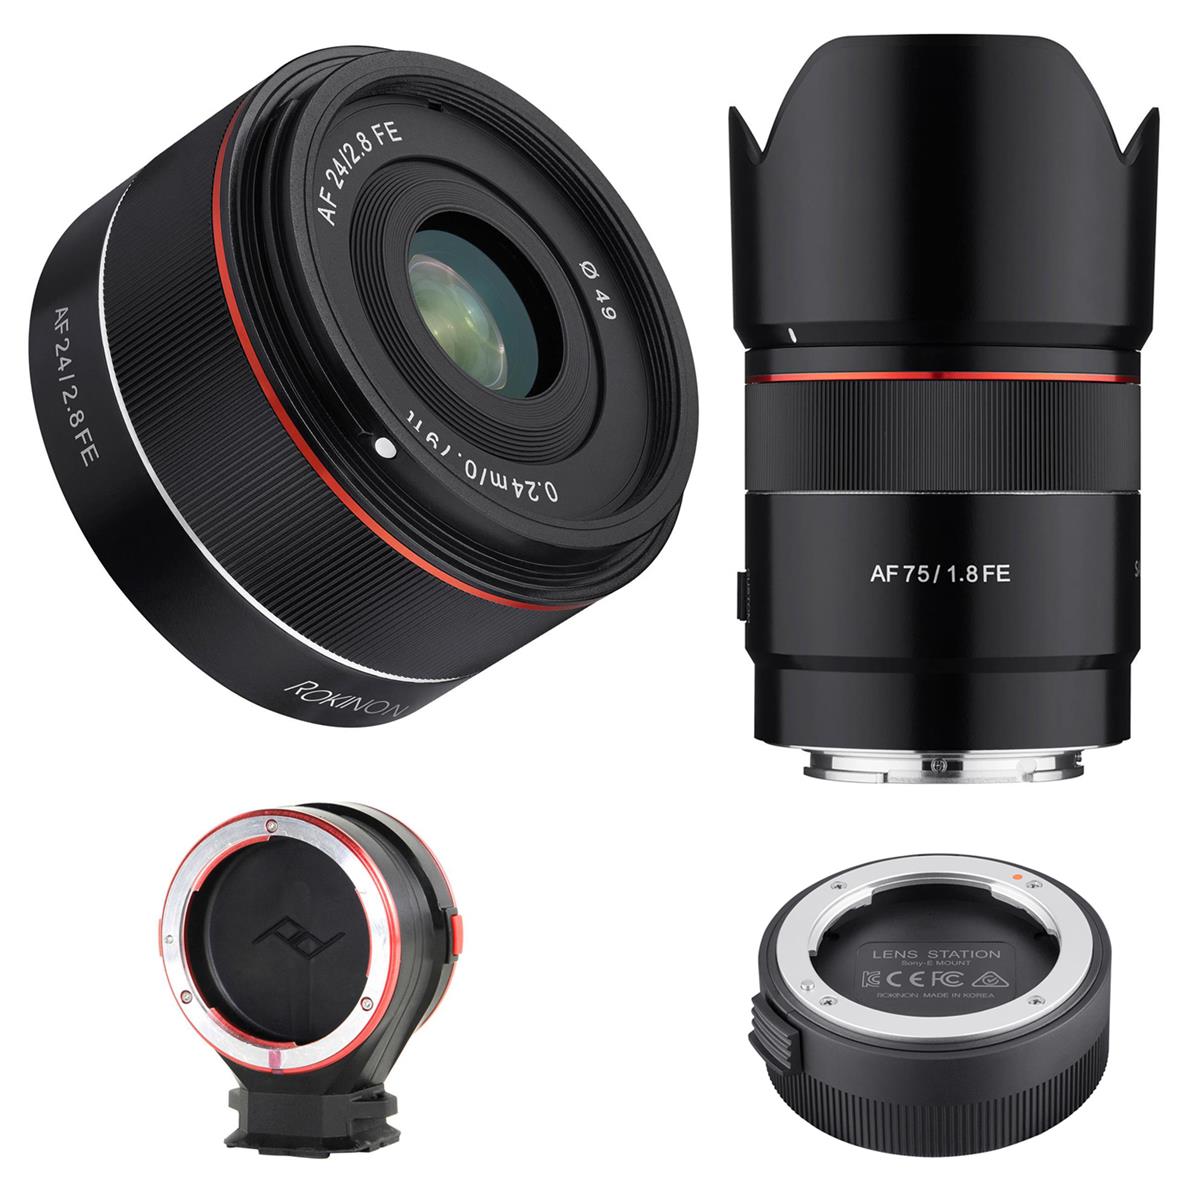 Rokinon 2 Lens Bundle for Sony E-Mount with 24mm, 75mm Lenses & Lens Station $529 shipped